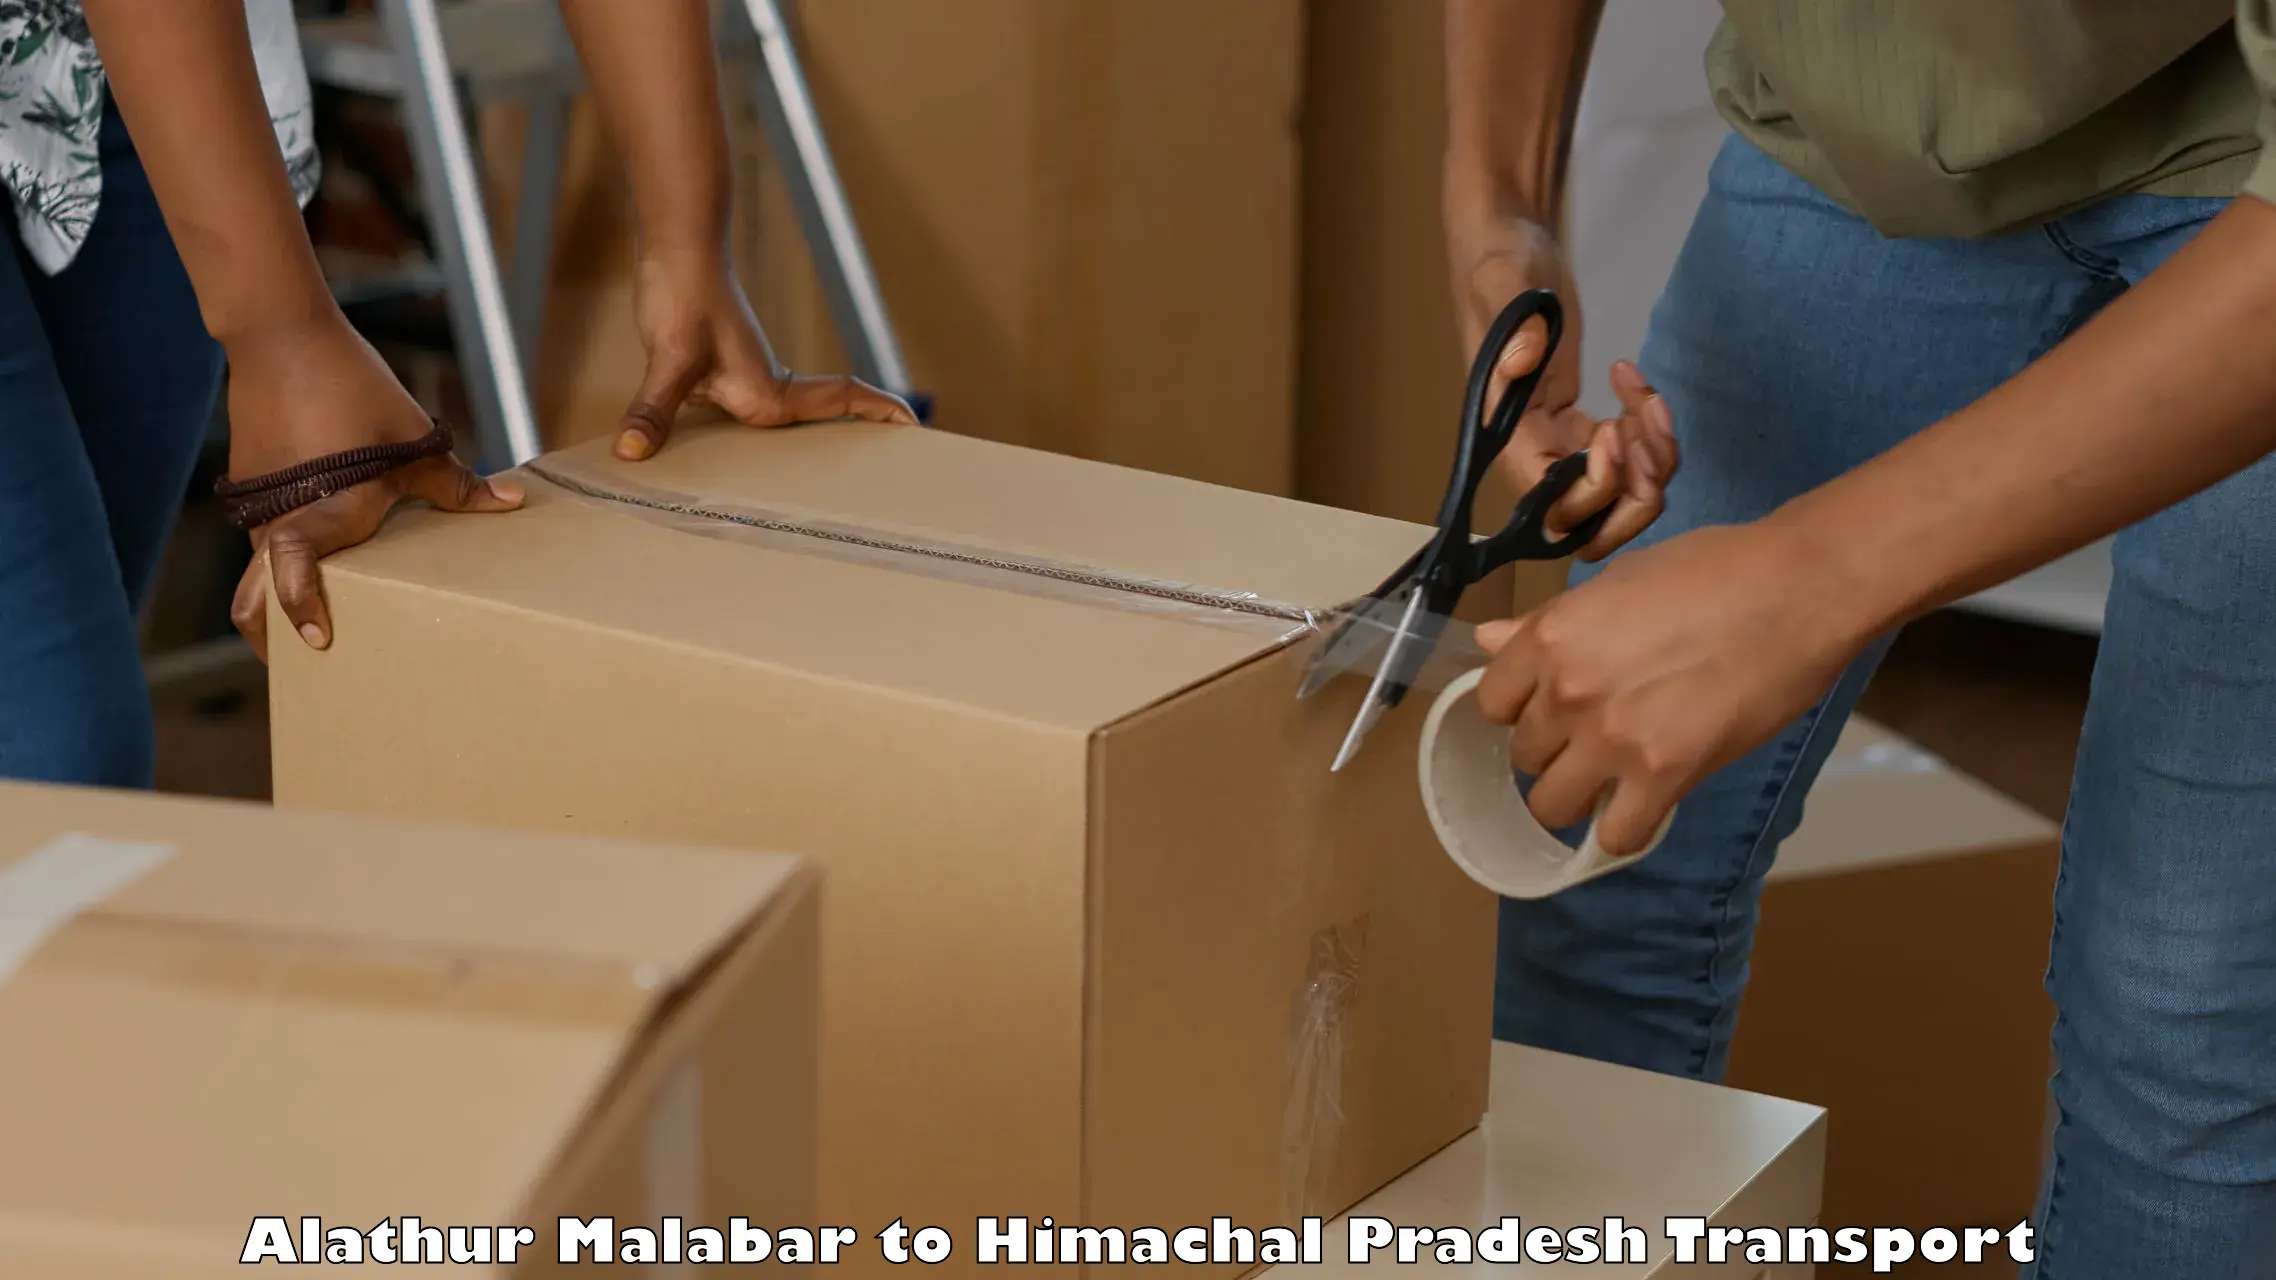 Truck transport companies in India Alathur Malabar to Banjar